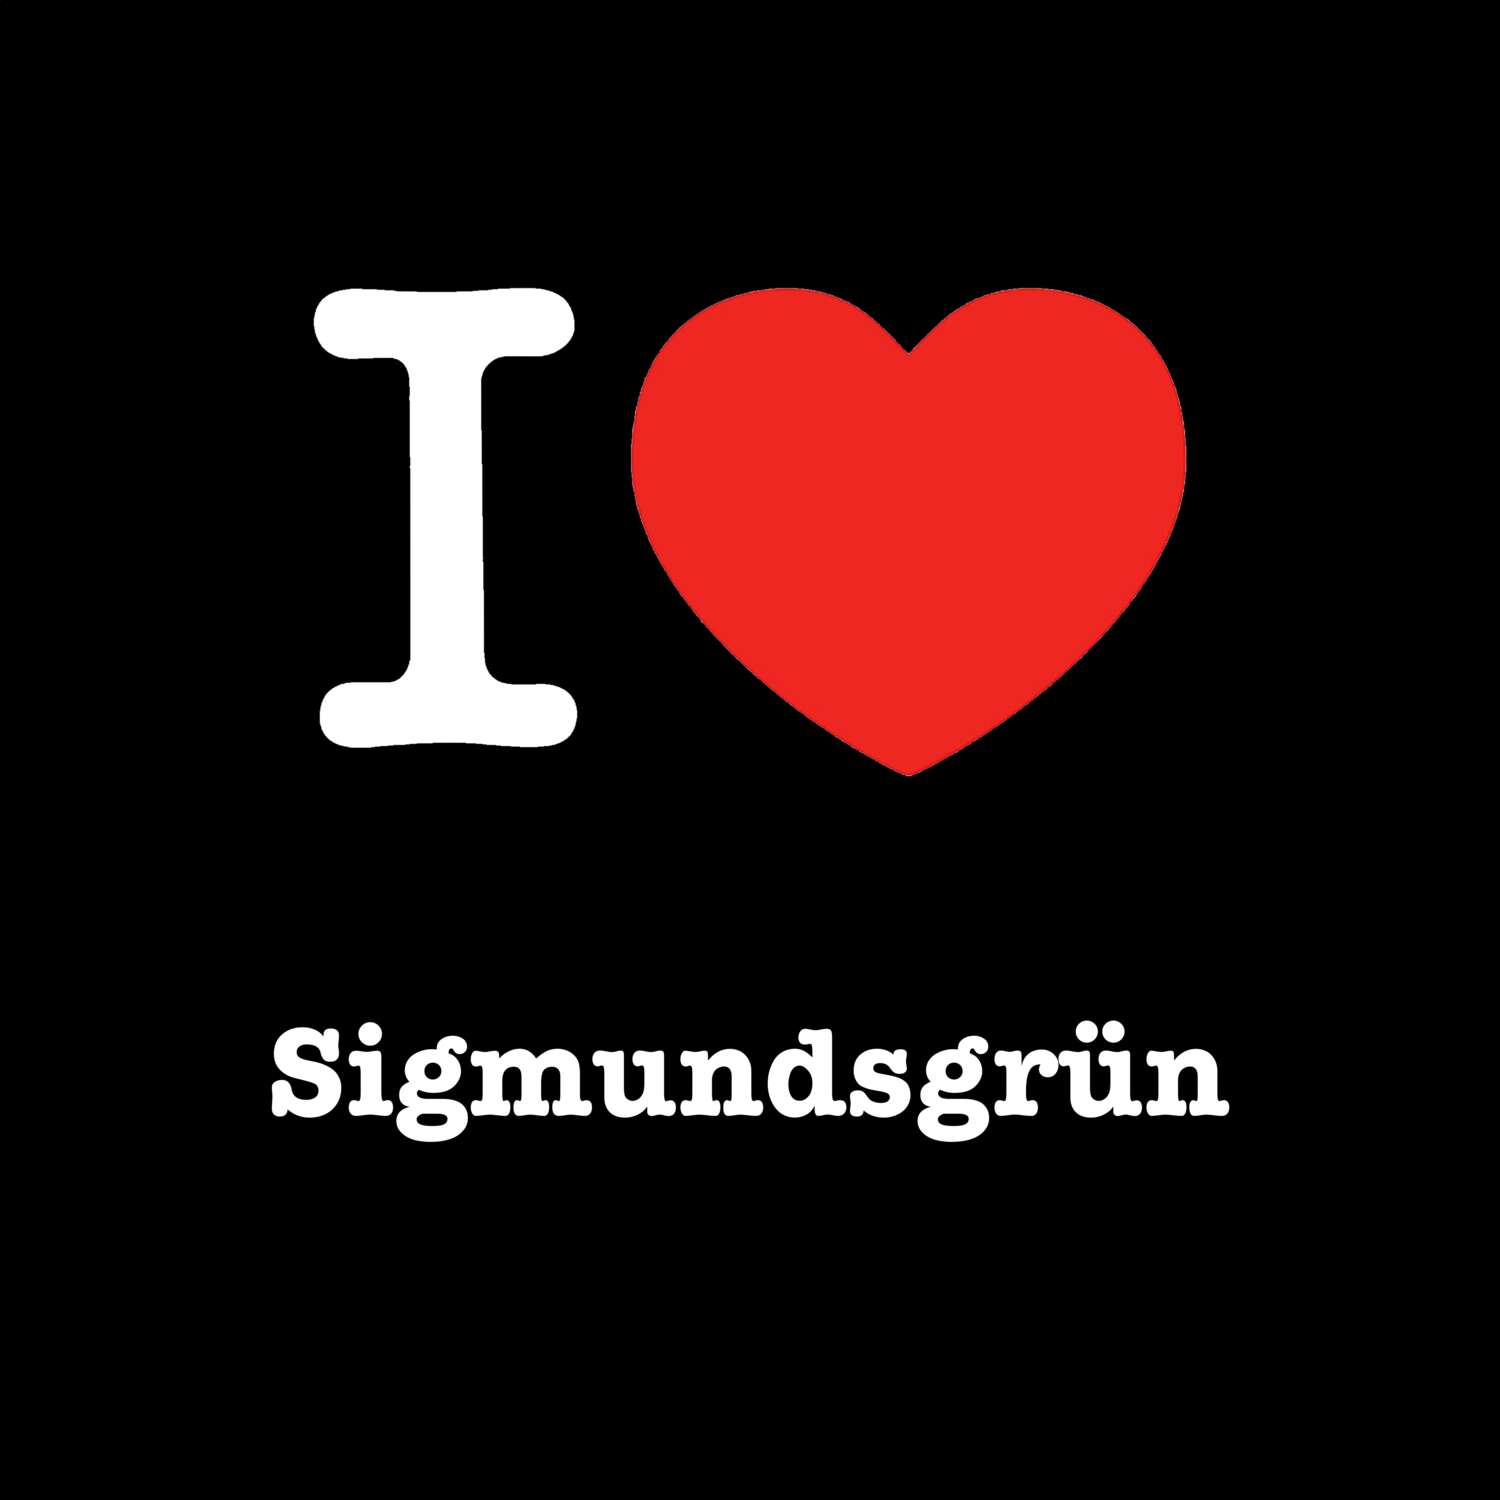 Sigmundsgrün T-Shirt »I love«